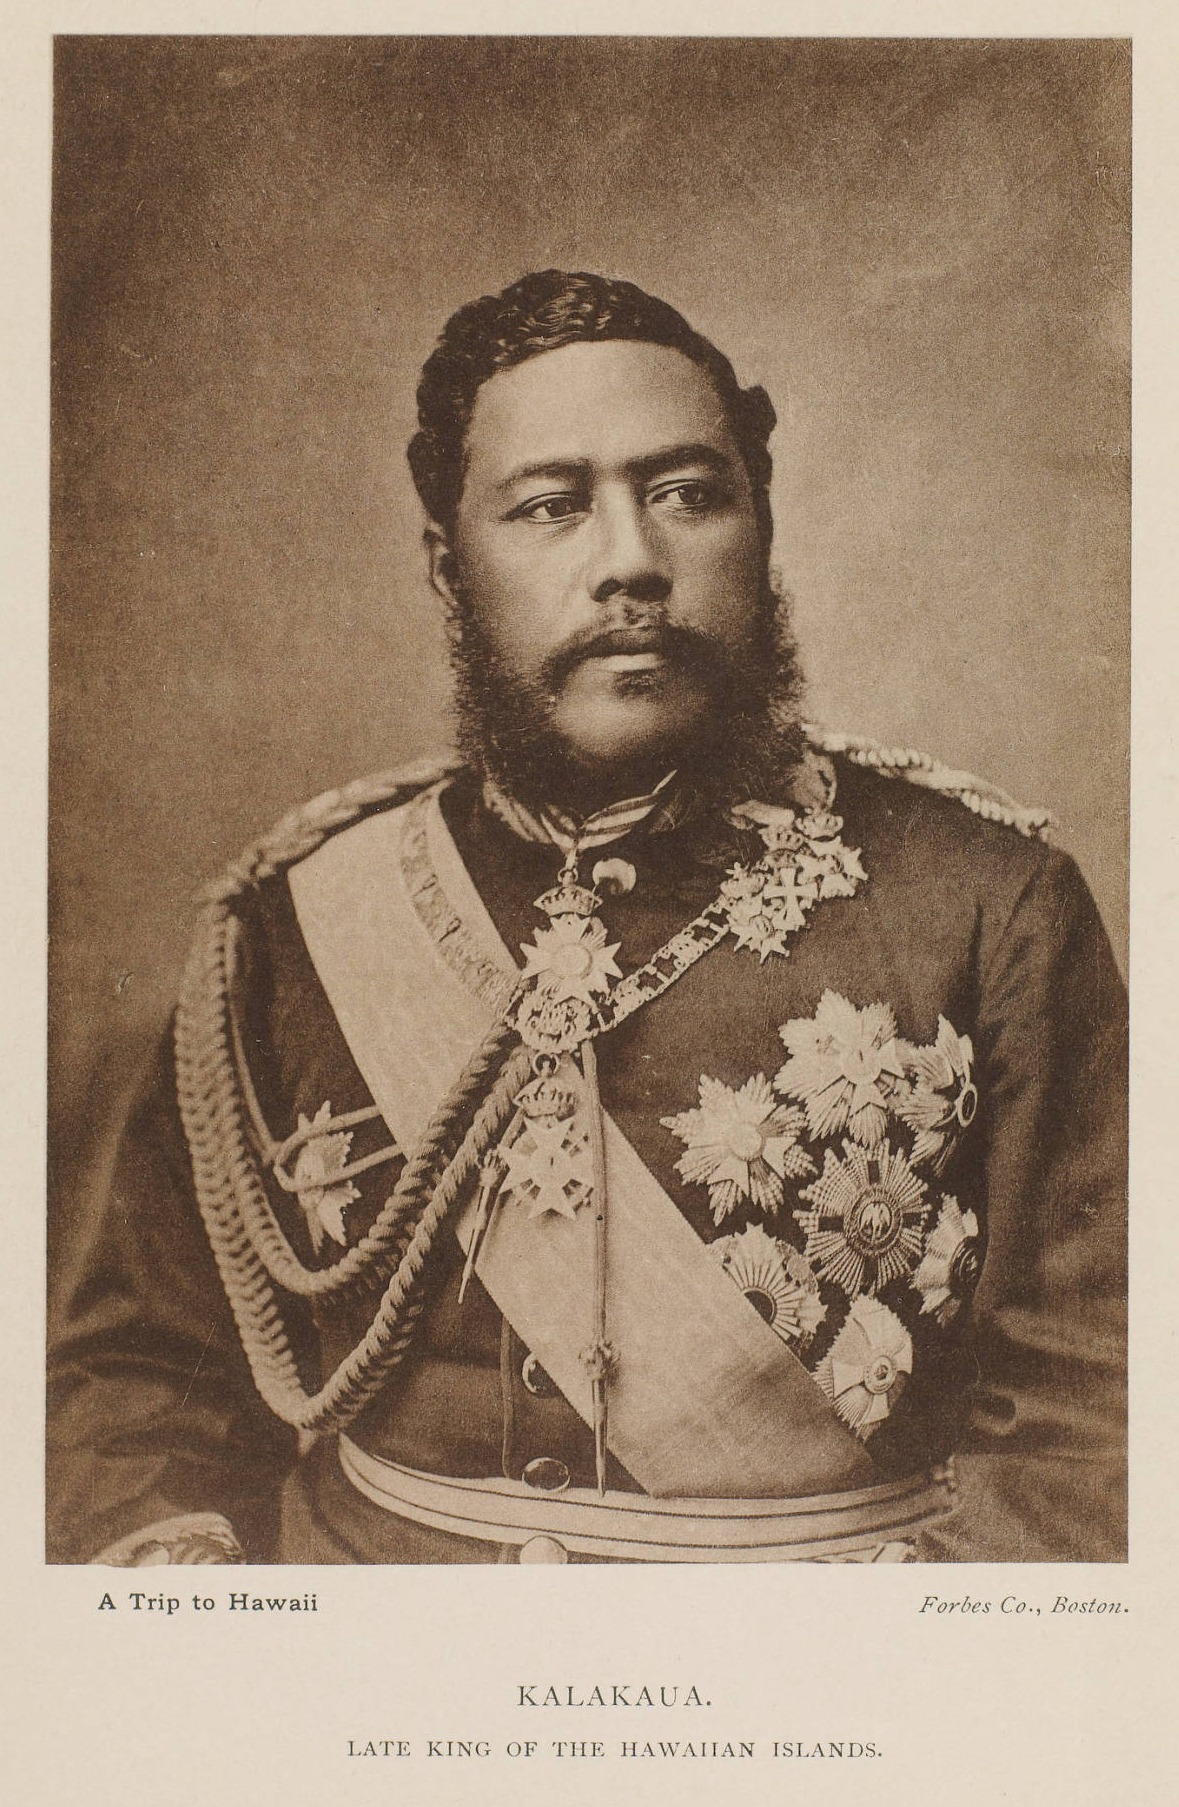 A Hawaiian man in a decorated uniform. Text below the photograph reads: Kalakaua. Late King of the Hawaiian Islands. A Trip to Hawaii. Forbes Co., Benton.